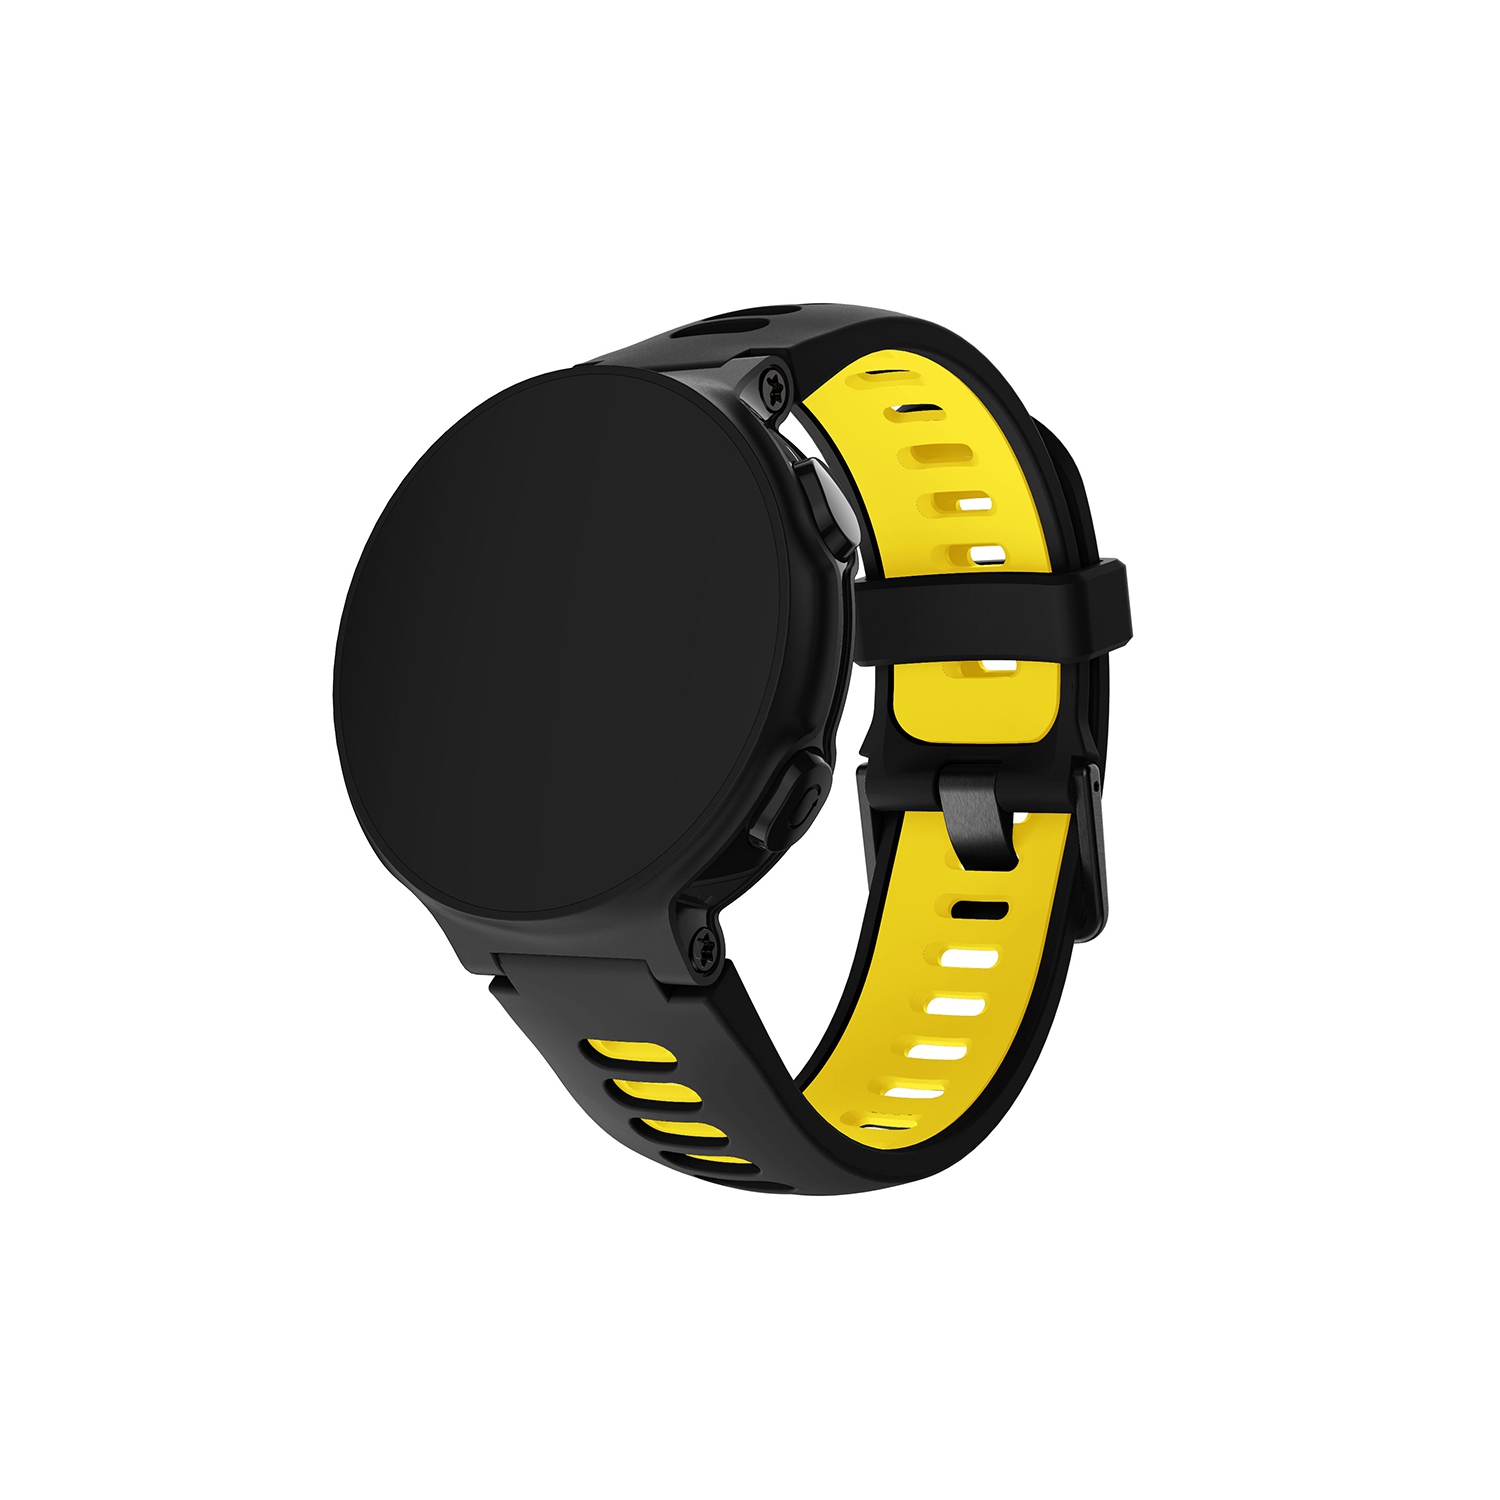 StrapsCo Rubber Watch Band Strap for Garmin Forerunner 200/230/235/620/630/735XT & Approach S5/S6/S20 - Black & Yellow